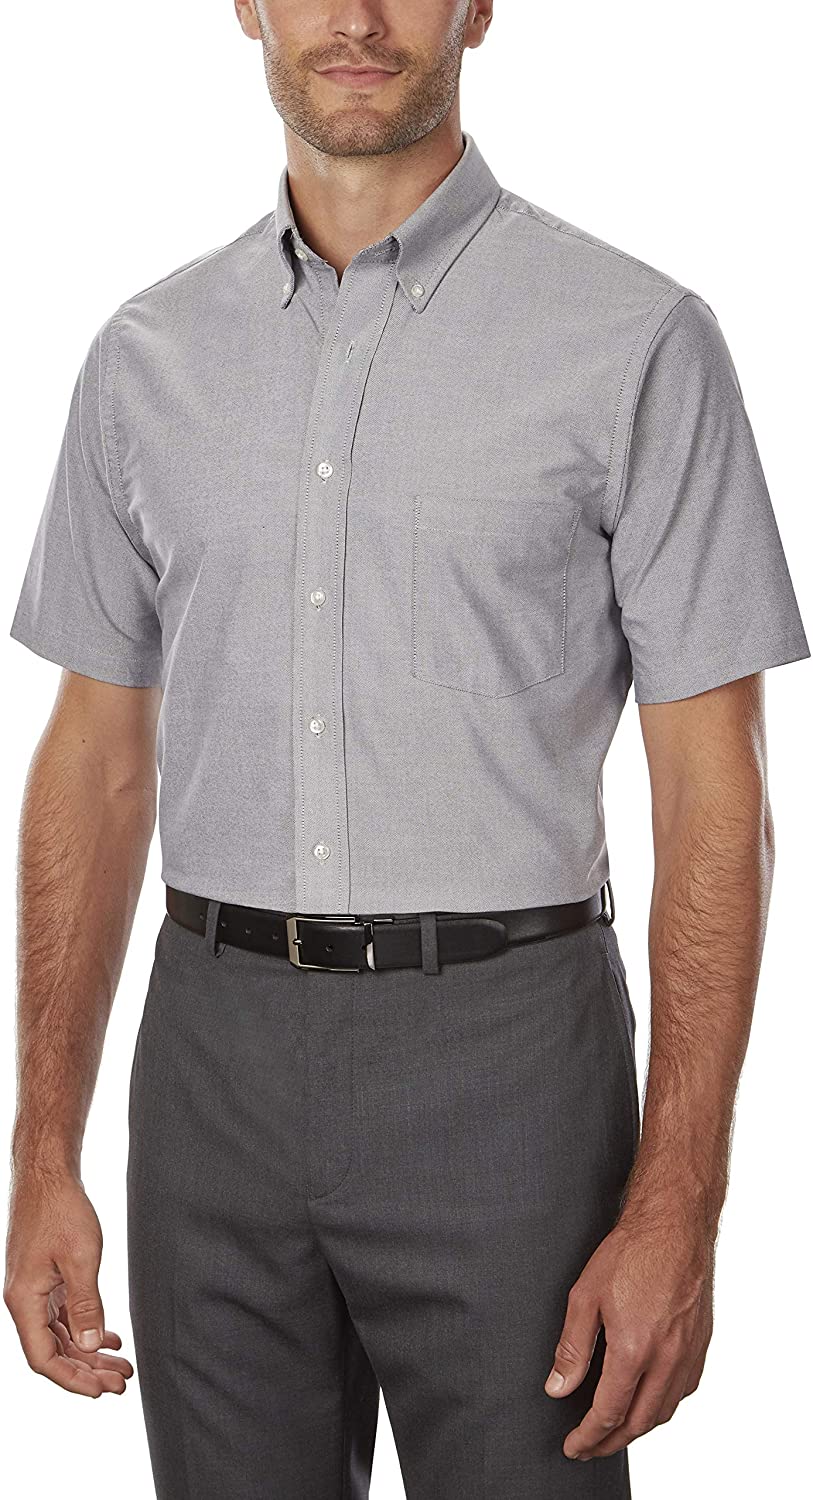 Van Heusen Men's Short Sleeve Dress Shirt Regular Fit, Greystone, Size ...